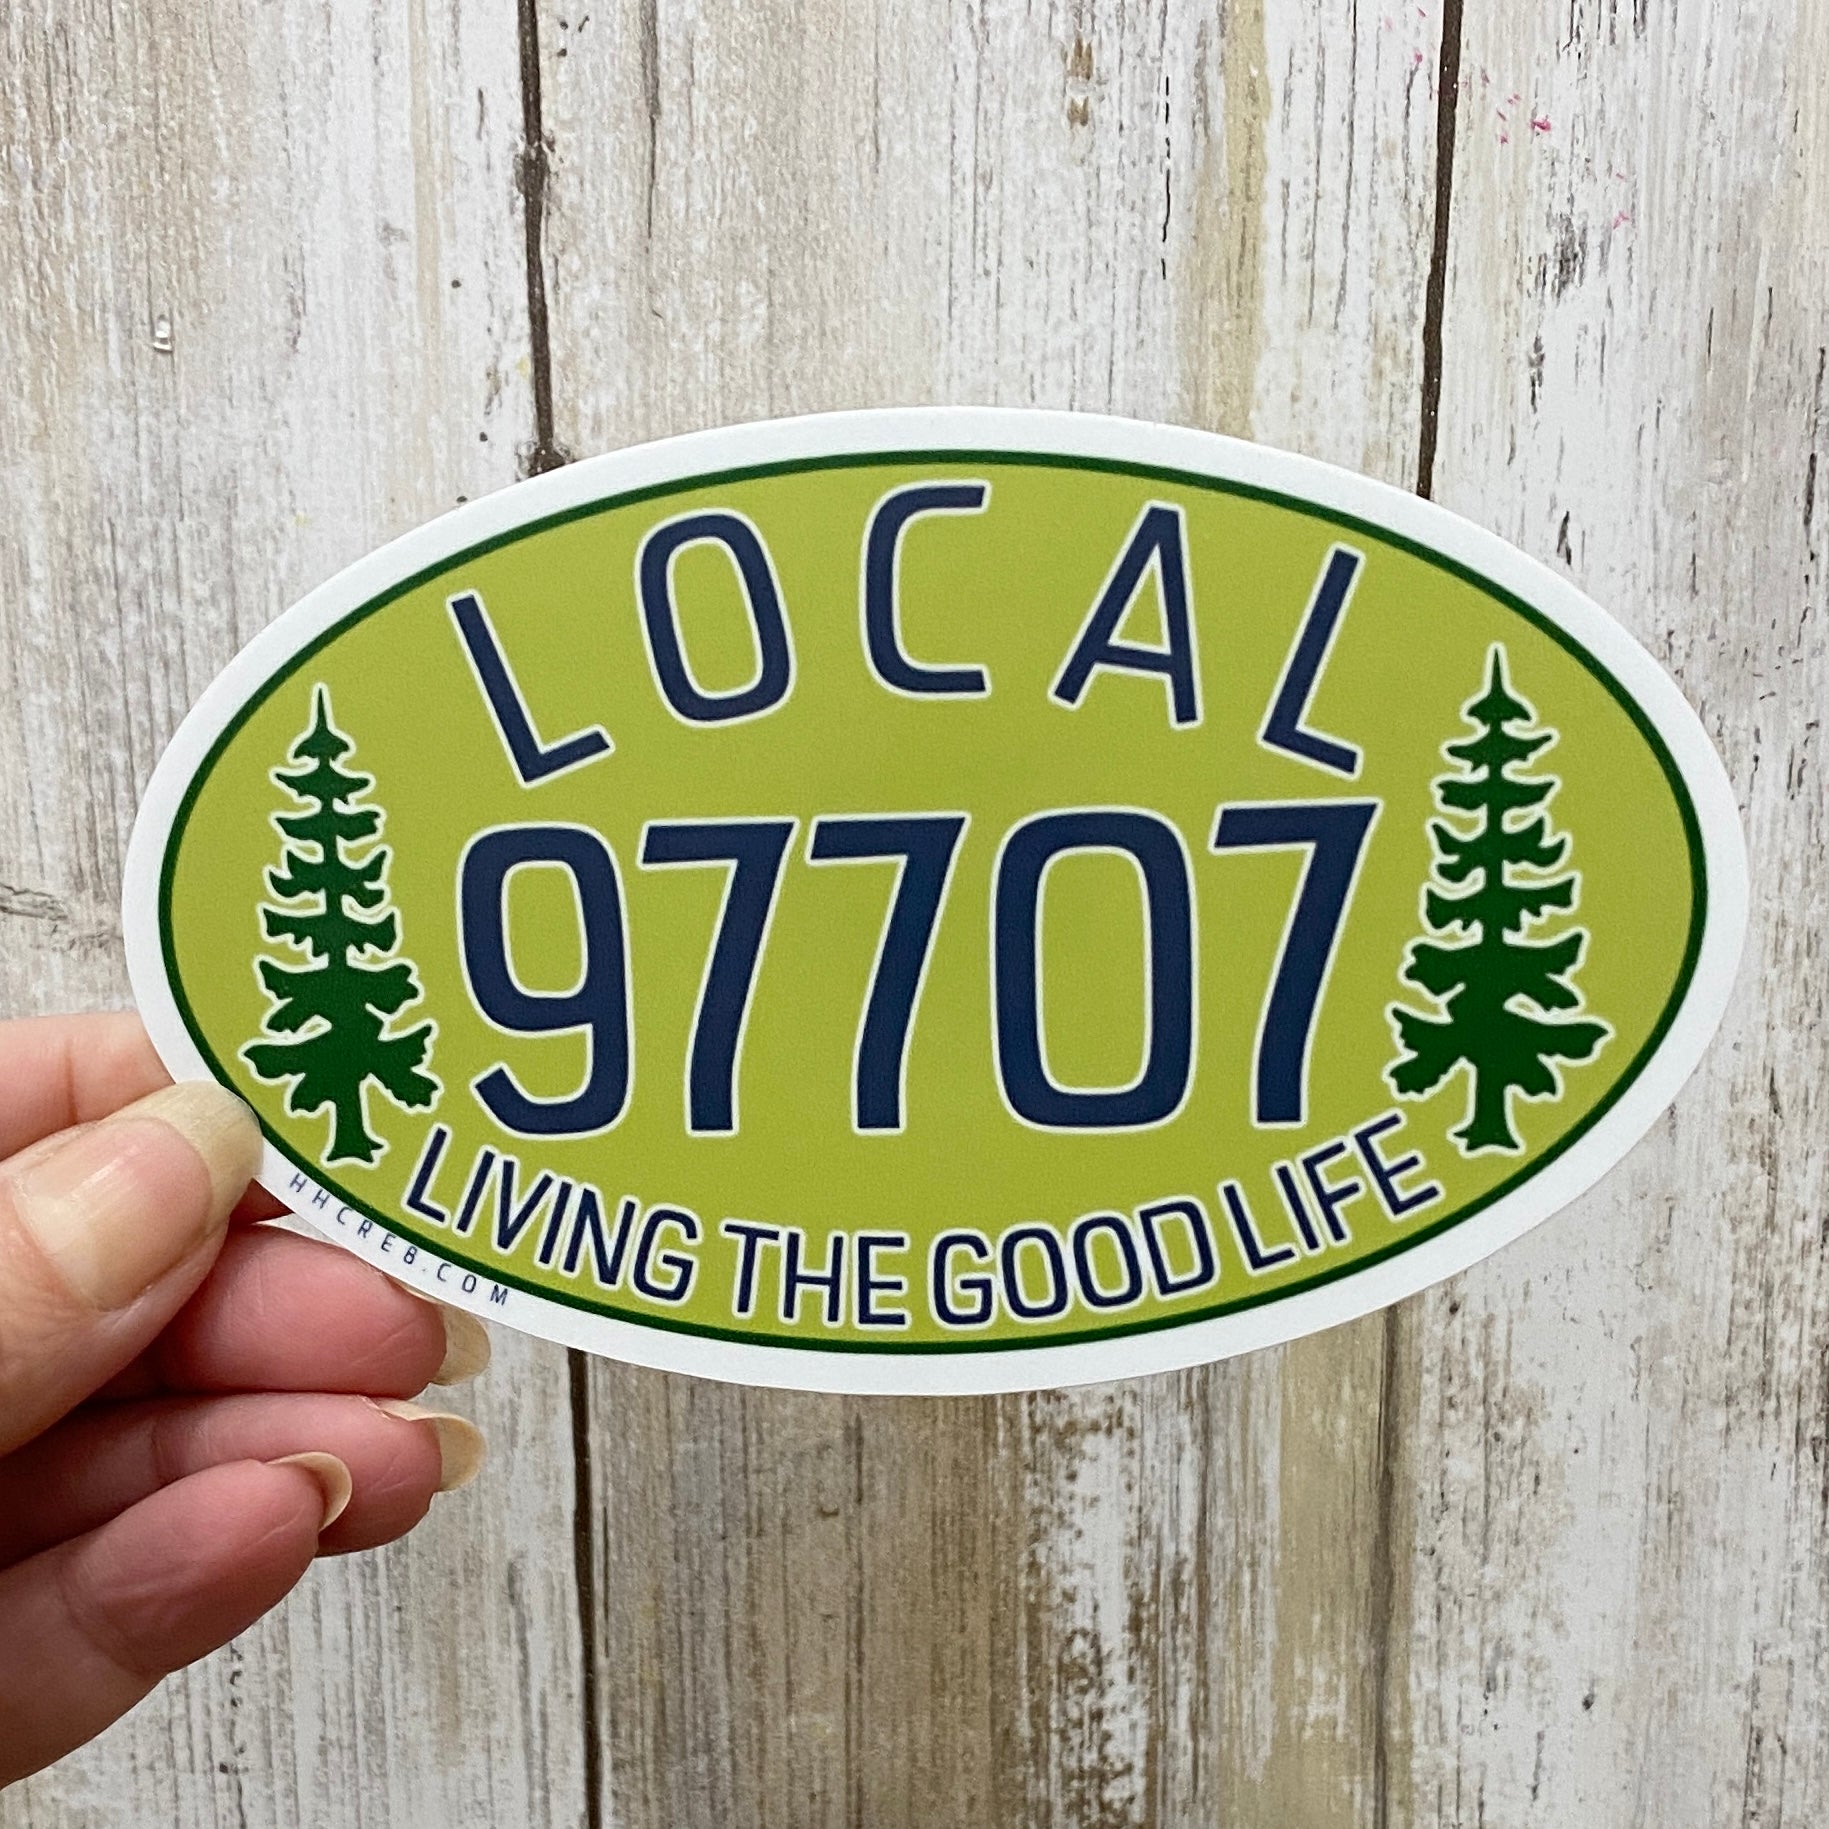 97707 Local - Living the Good Life Vinyl Sticker - Created by Vivian Houser